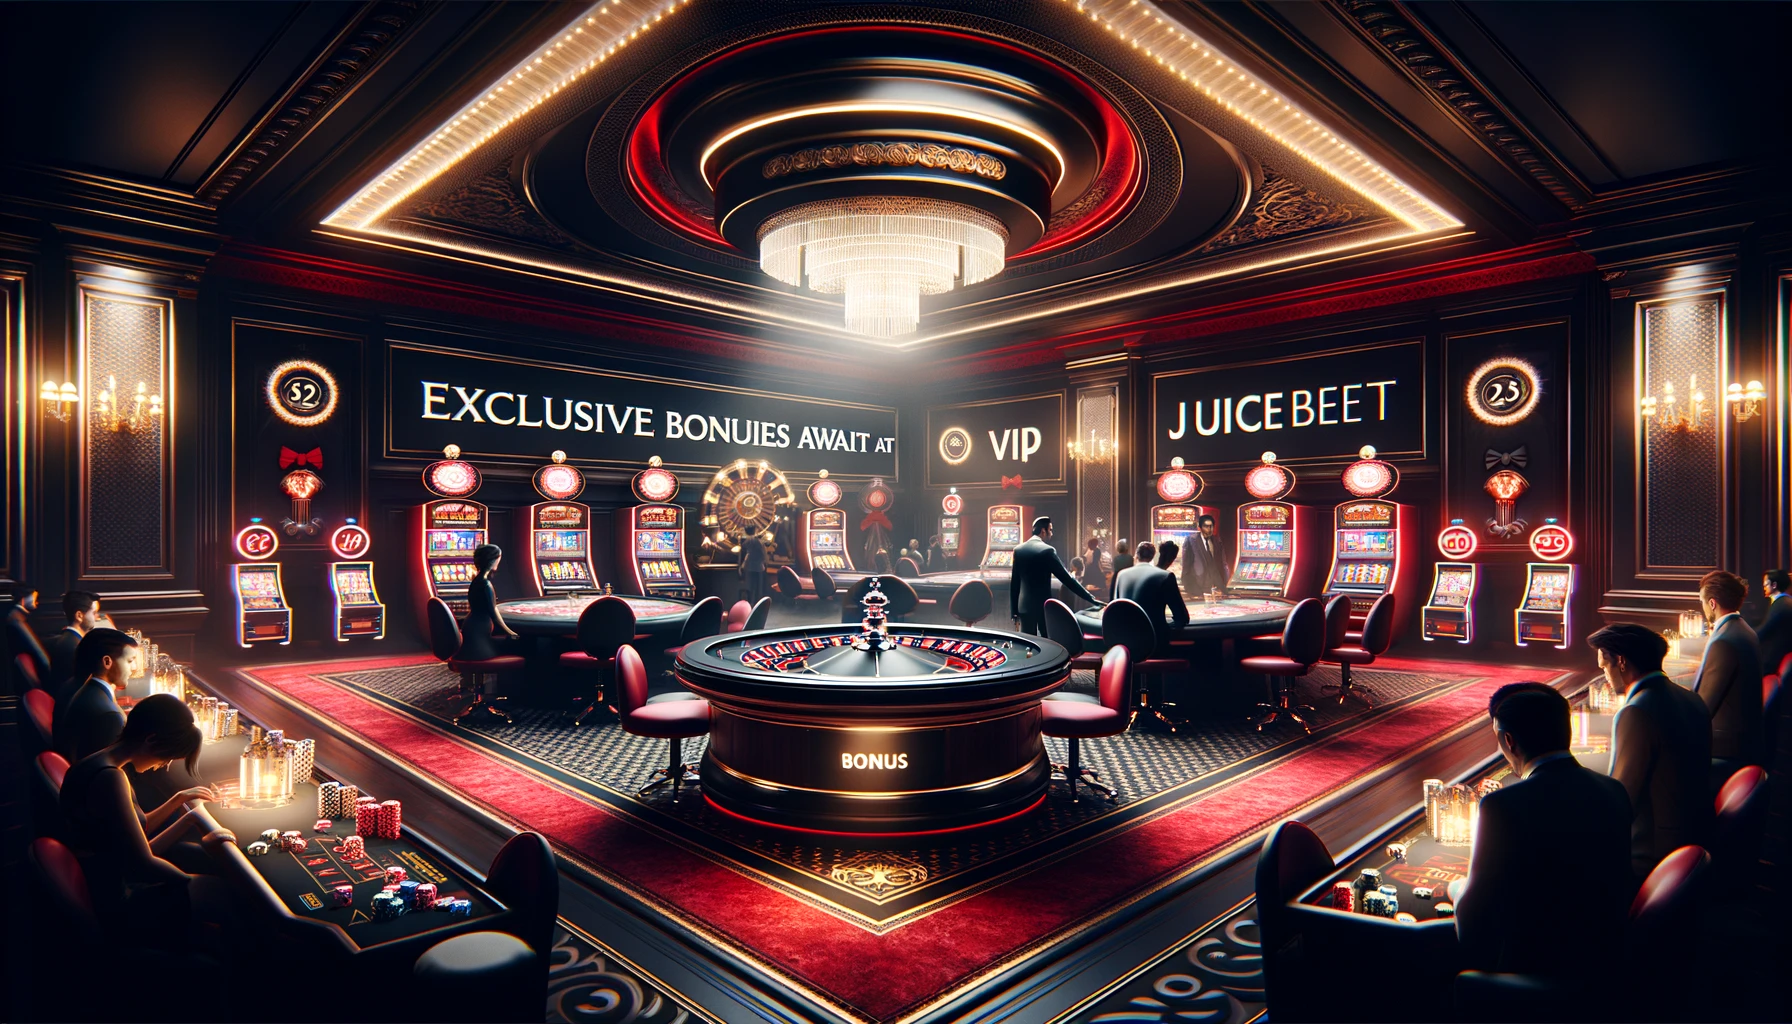 Juicebet casino 